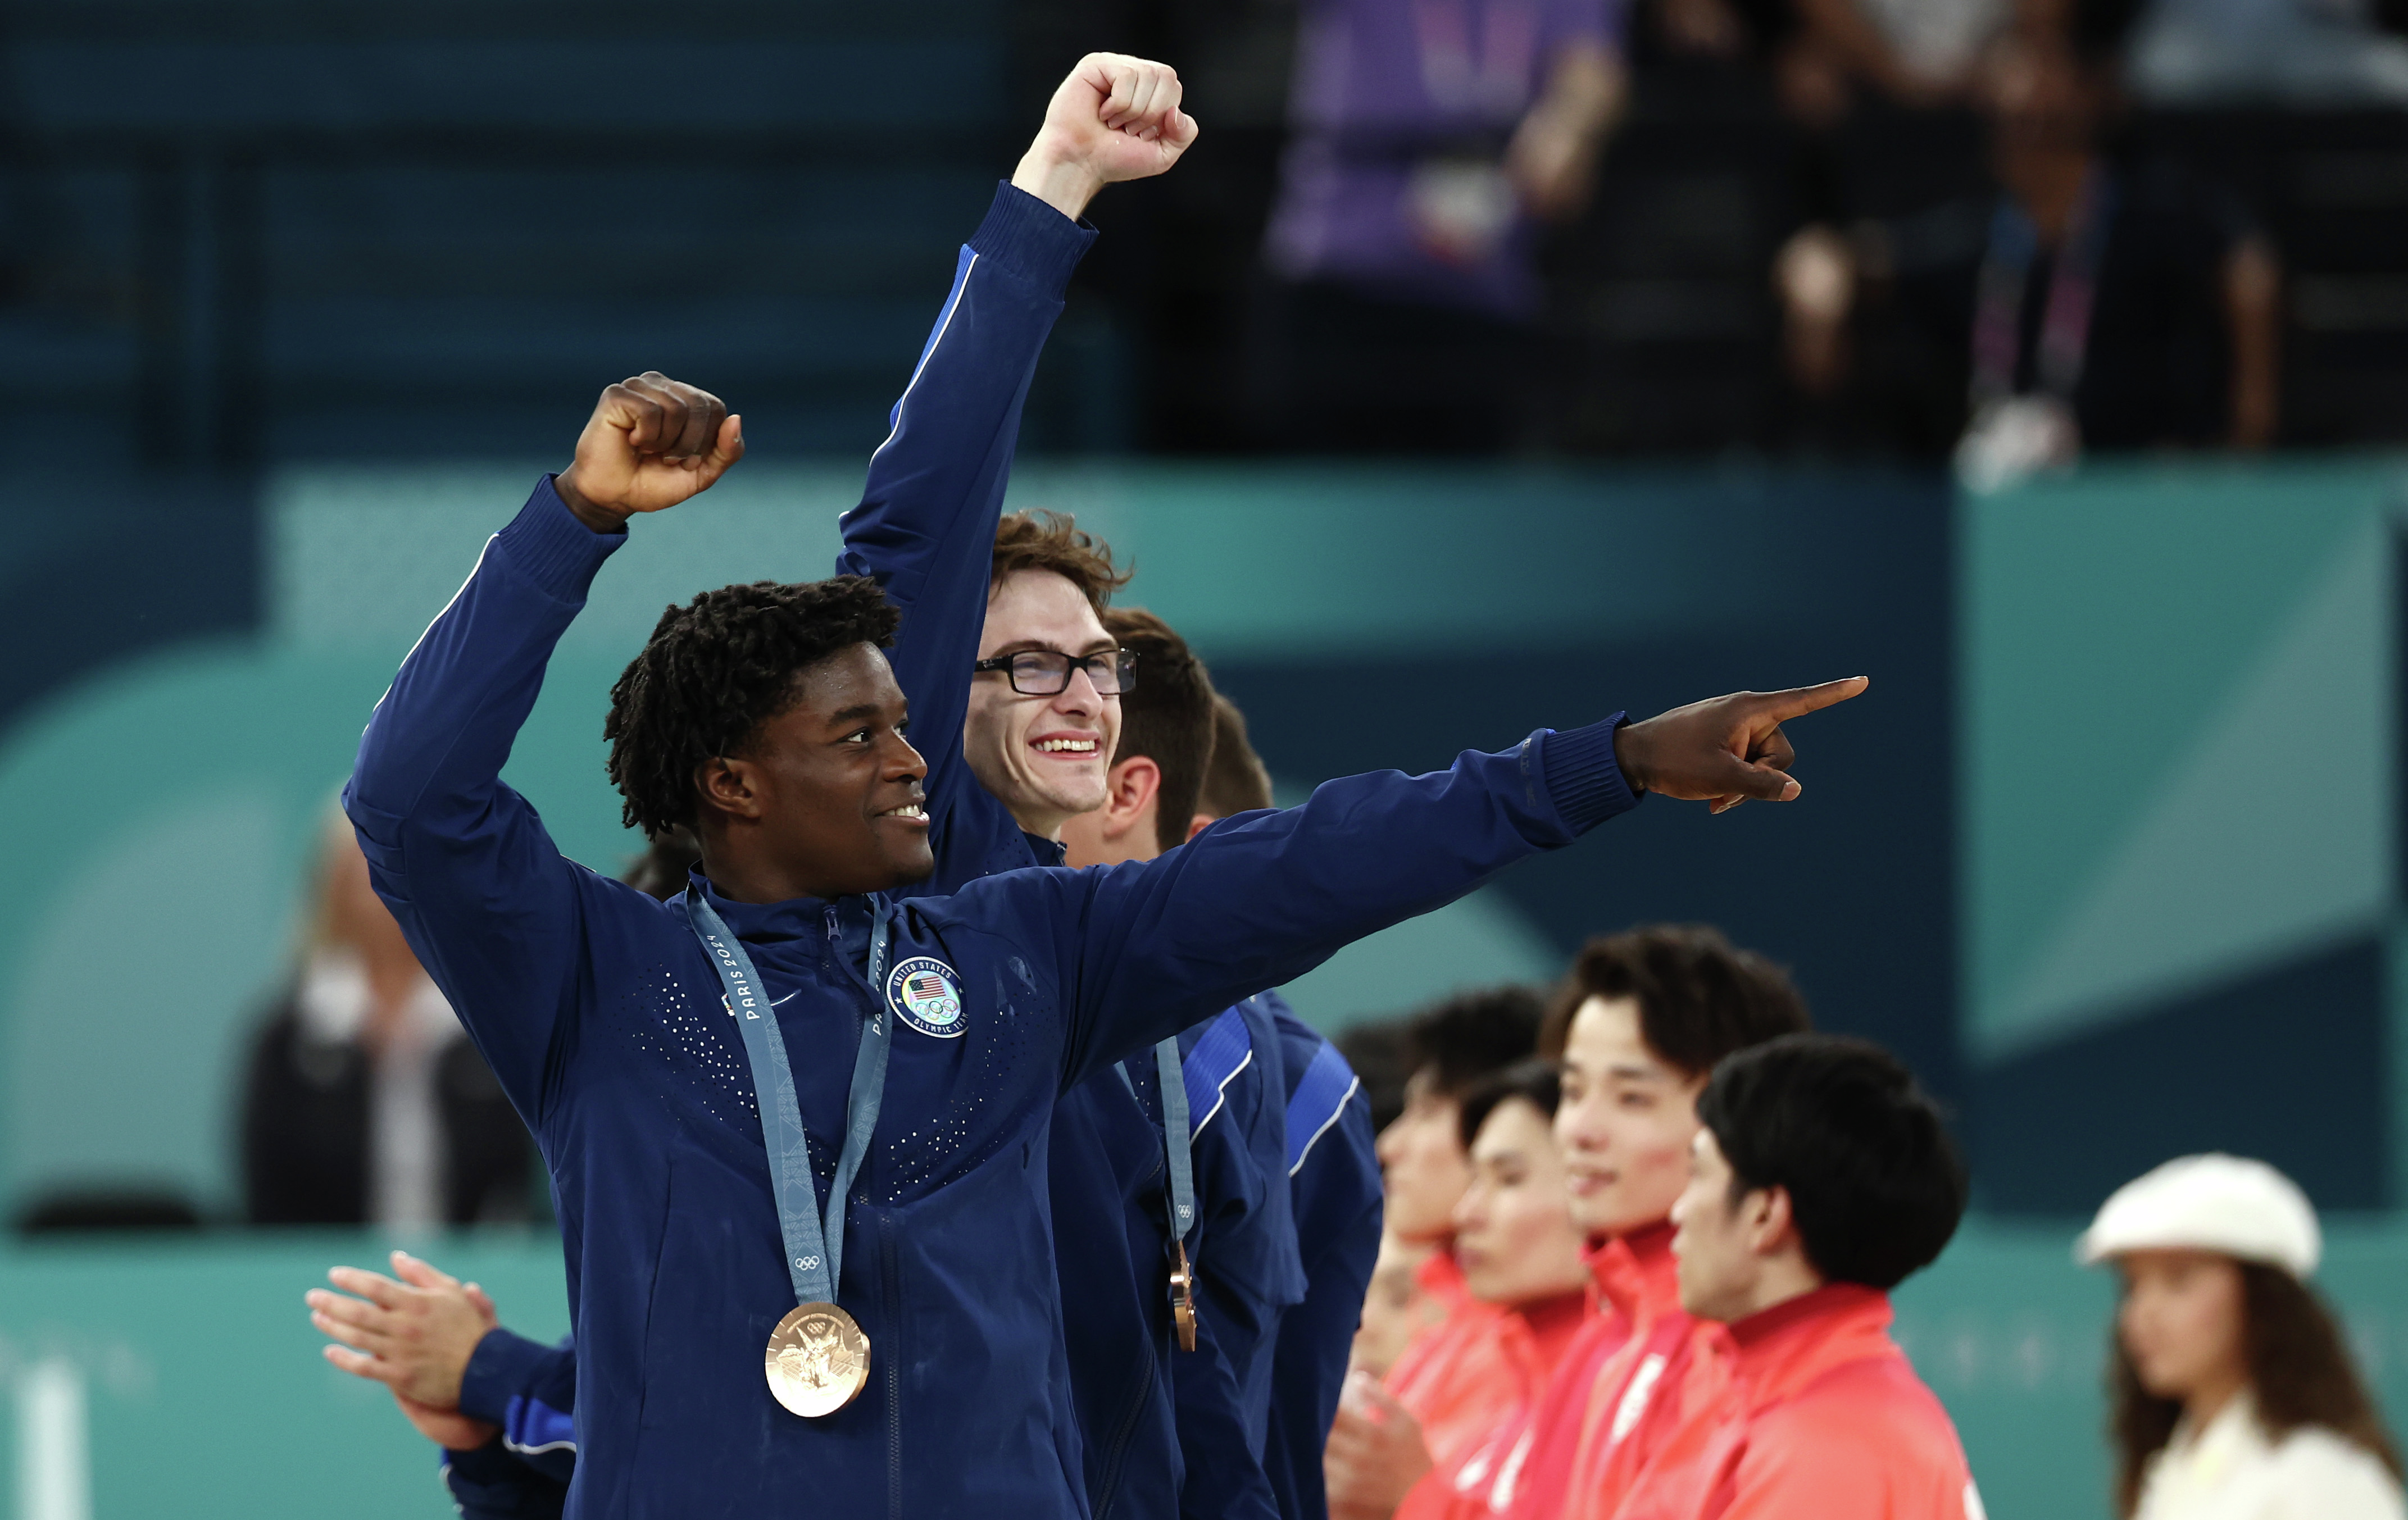 ON THE RECORD: U.S. men's gymnastics team wins bronze